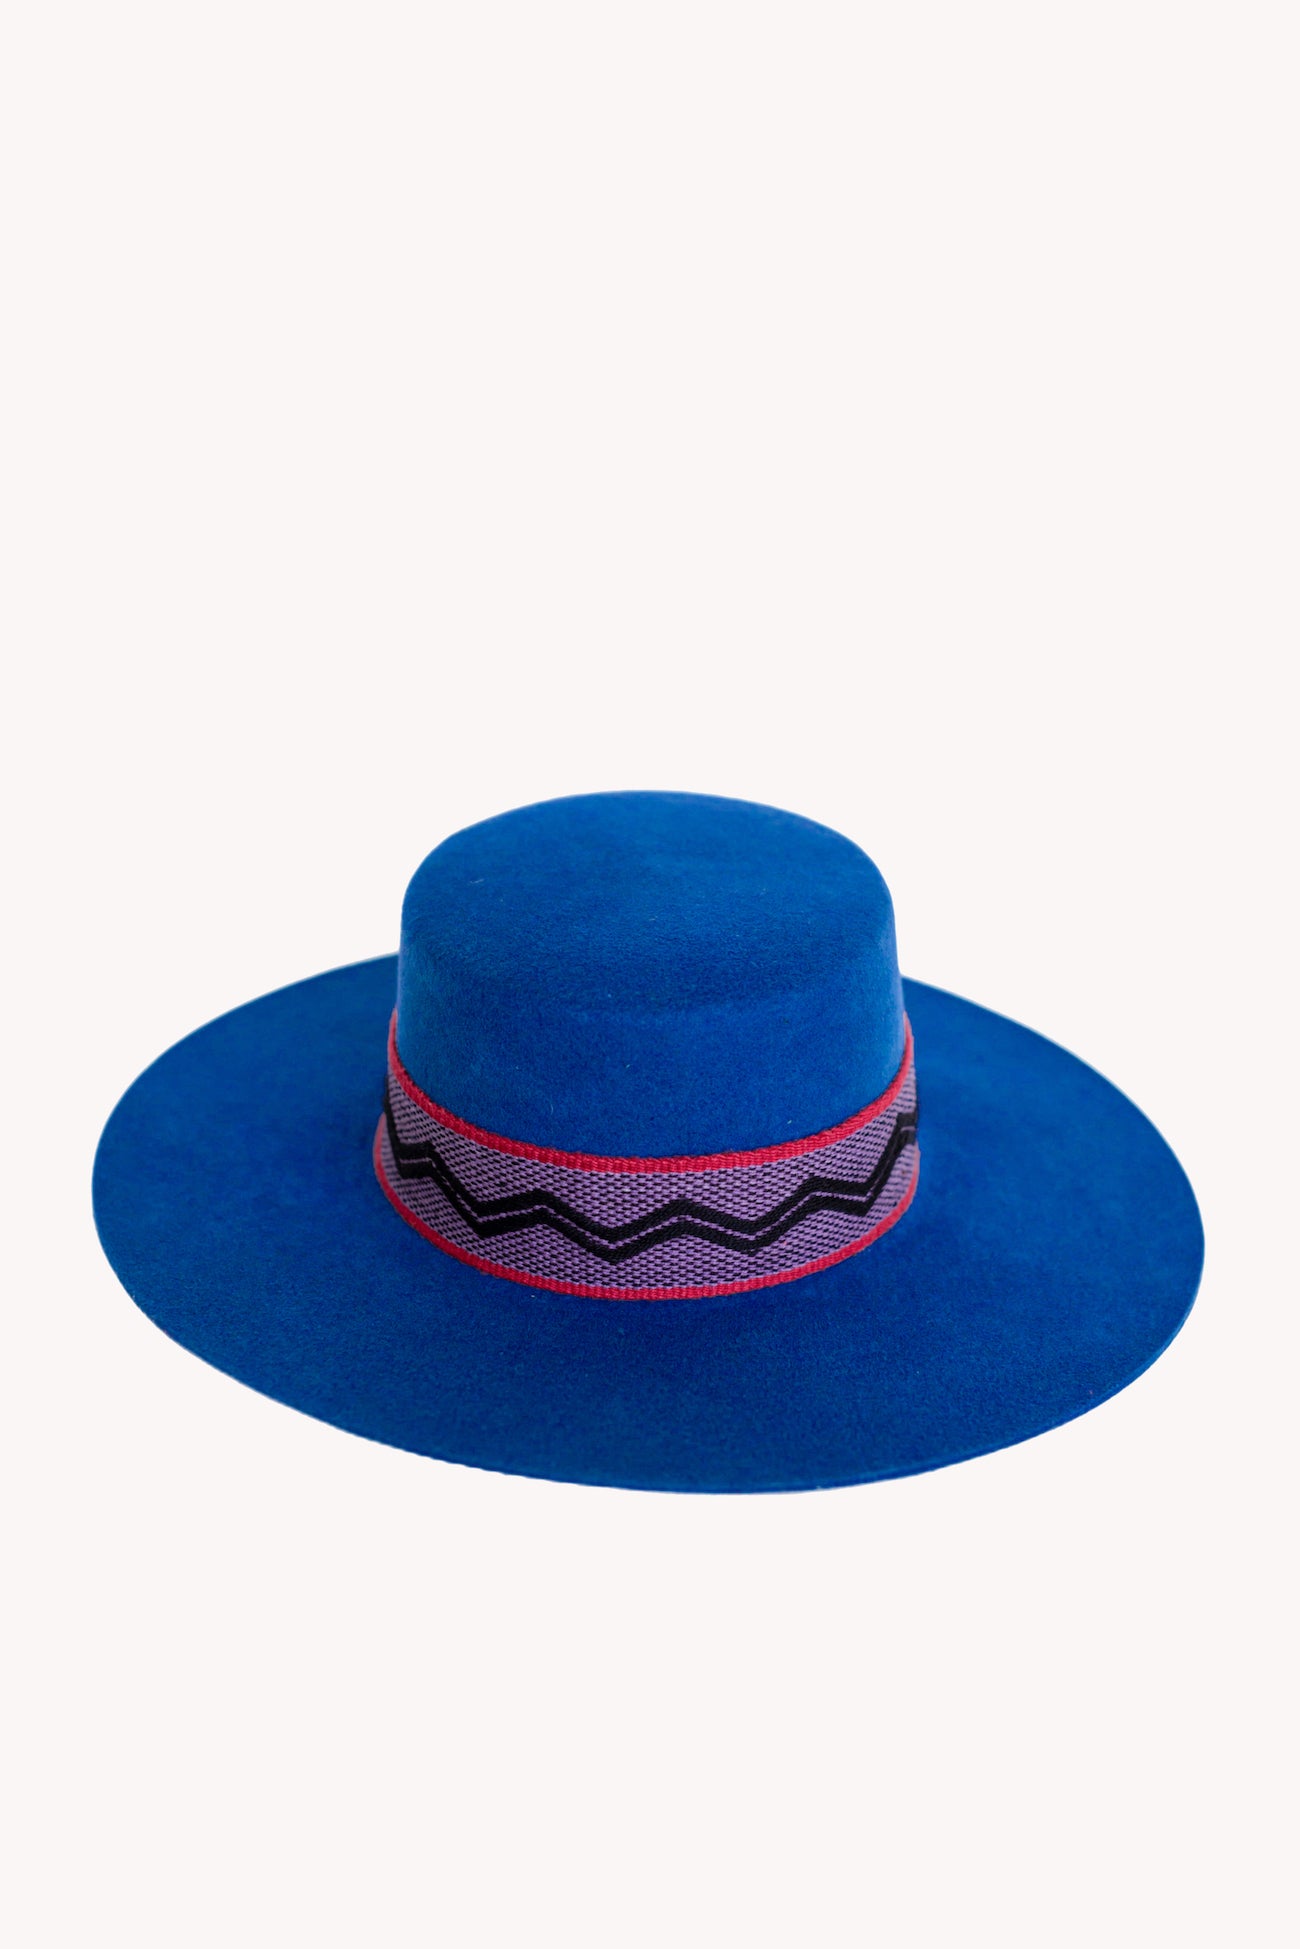 Blue Spanish style alpaca wool artisan hat